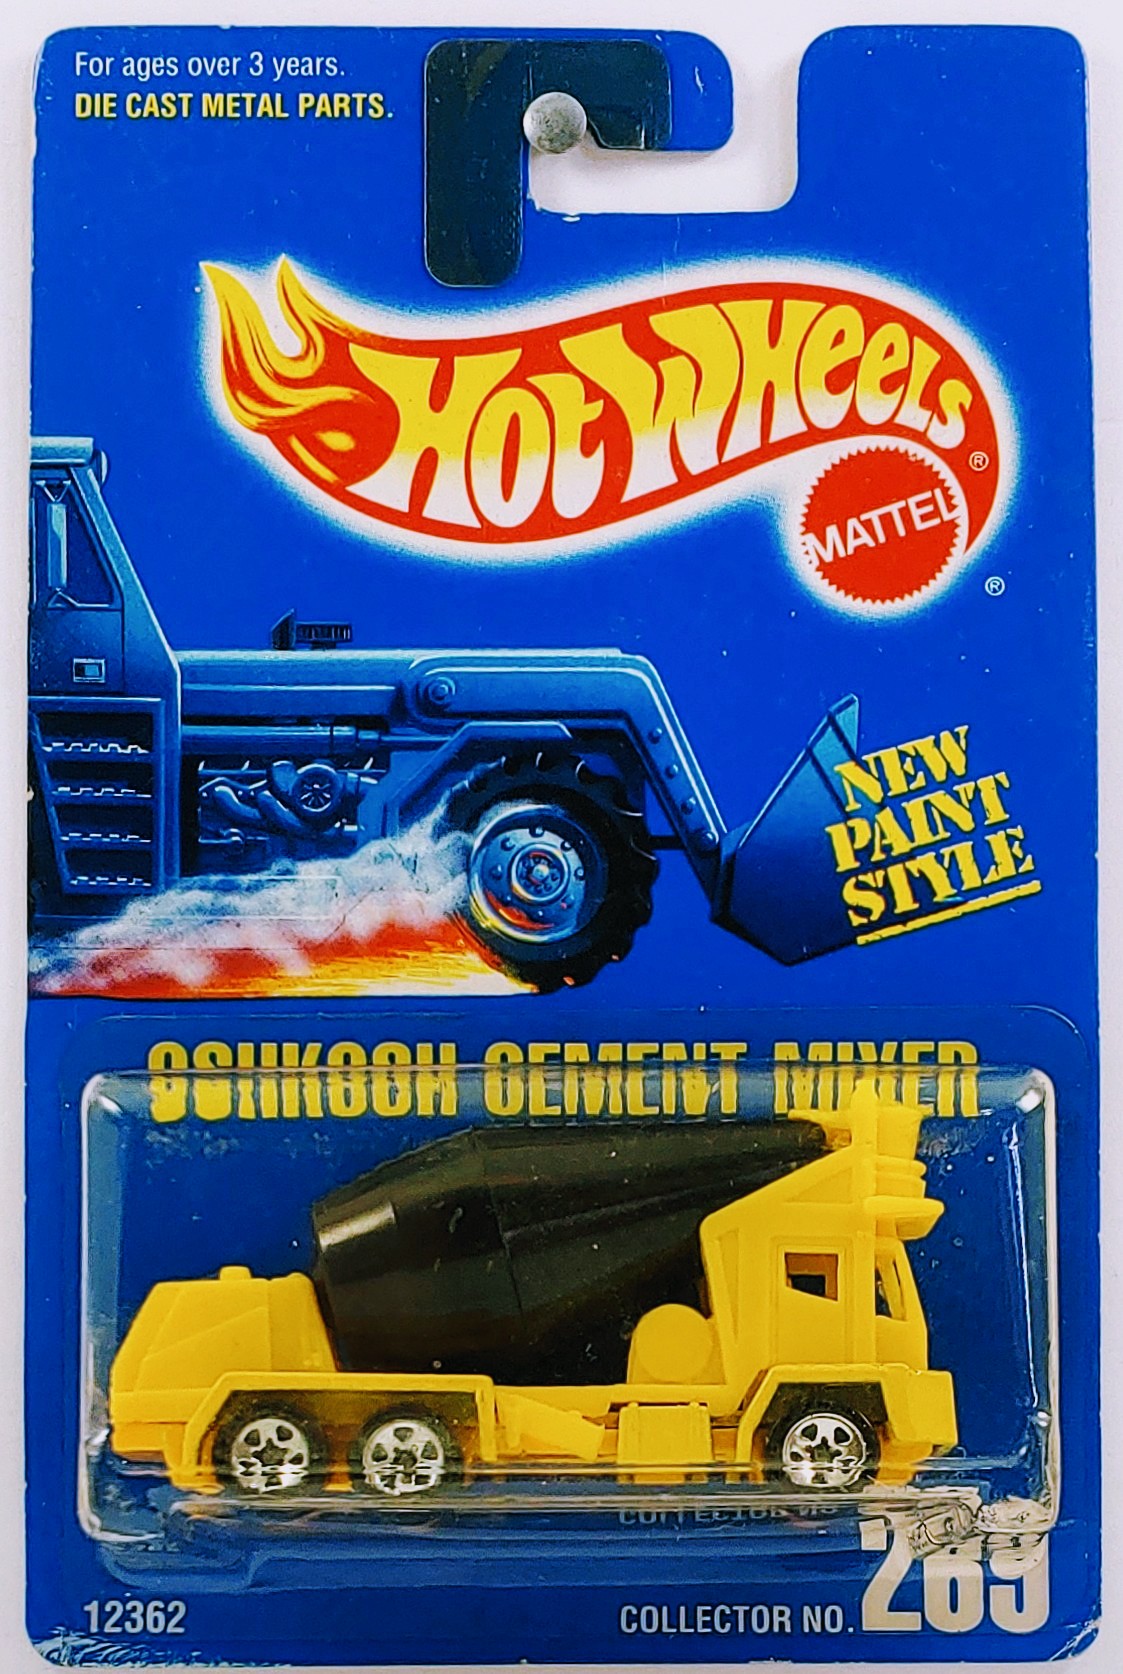 Hot Wheels 1995 - Collector # 269 - Oshkosh Cement Mixer - Yellow & Black - 5 Spokes - USA